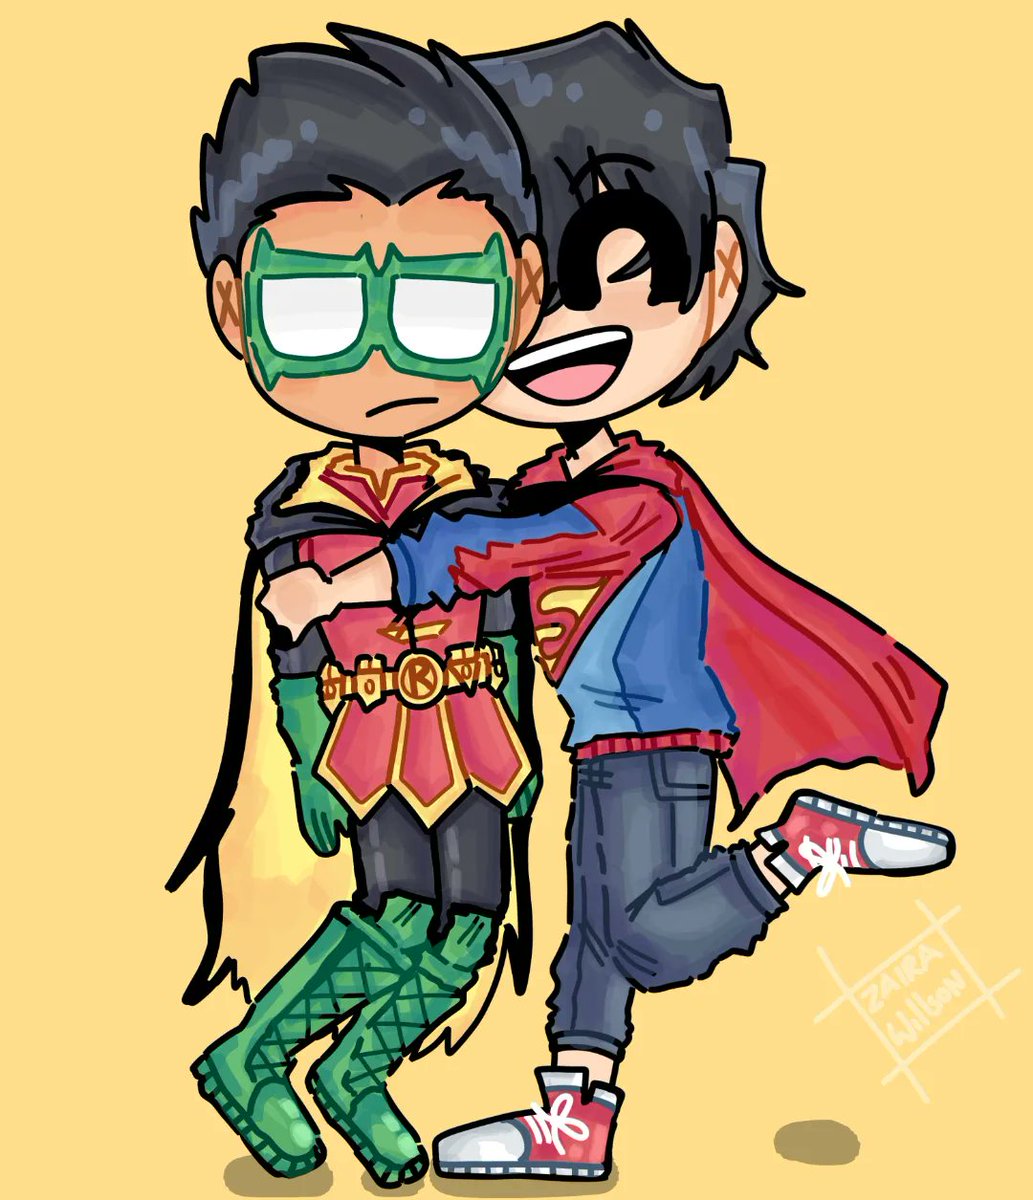 SUPER SOONS 💙💚

#SUPERSOONS #supersoon #DamianWayne #jonkent #Superboy #Robin #damijon #jondami #fanart #ibispaintx